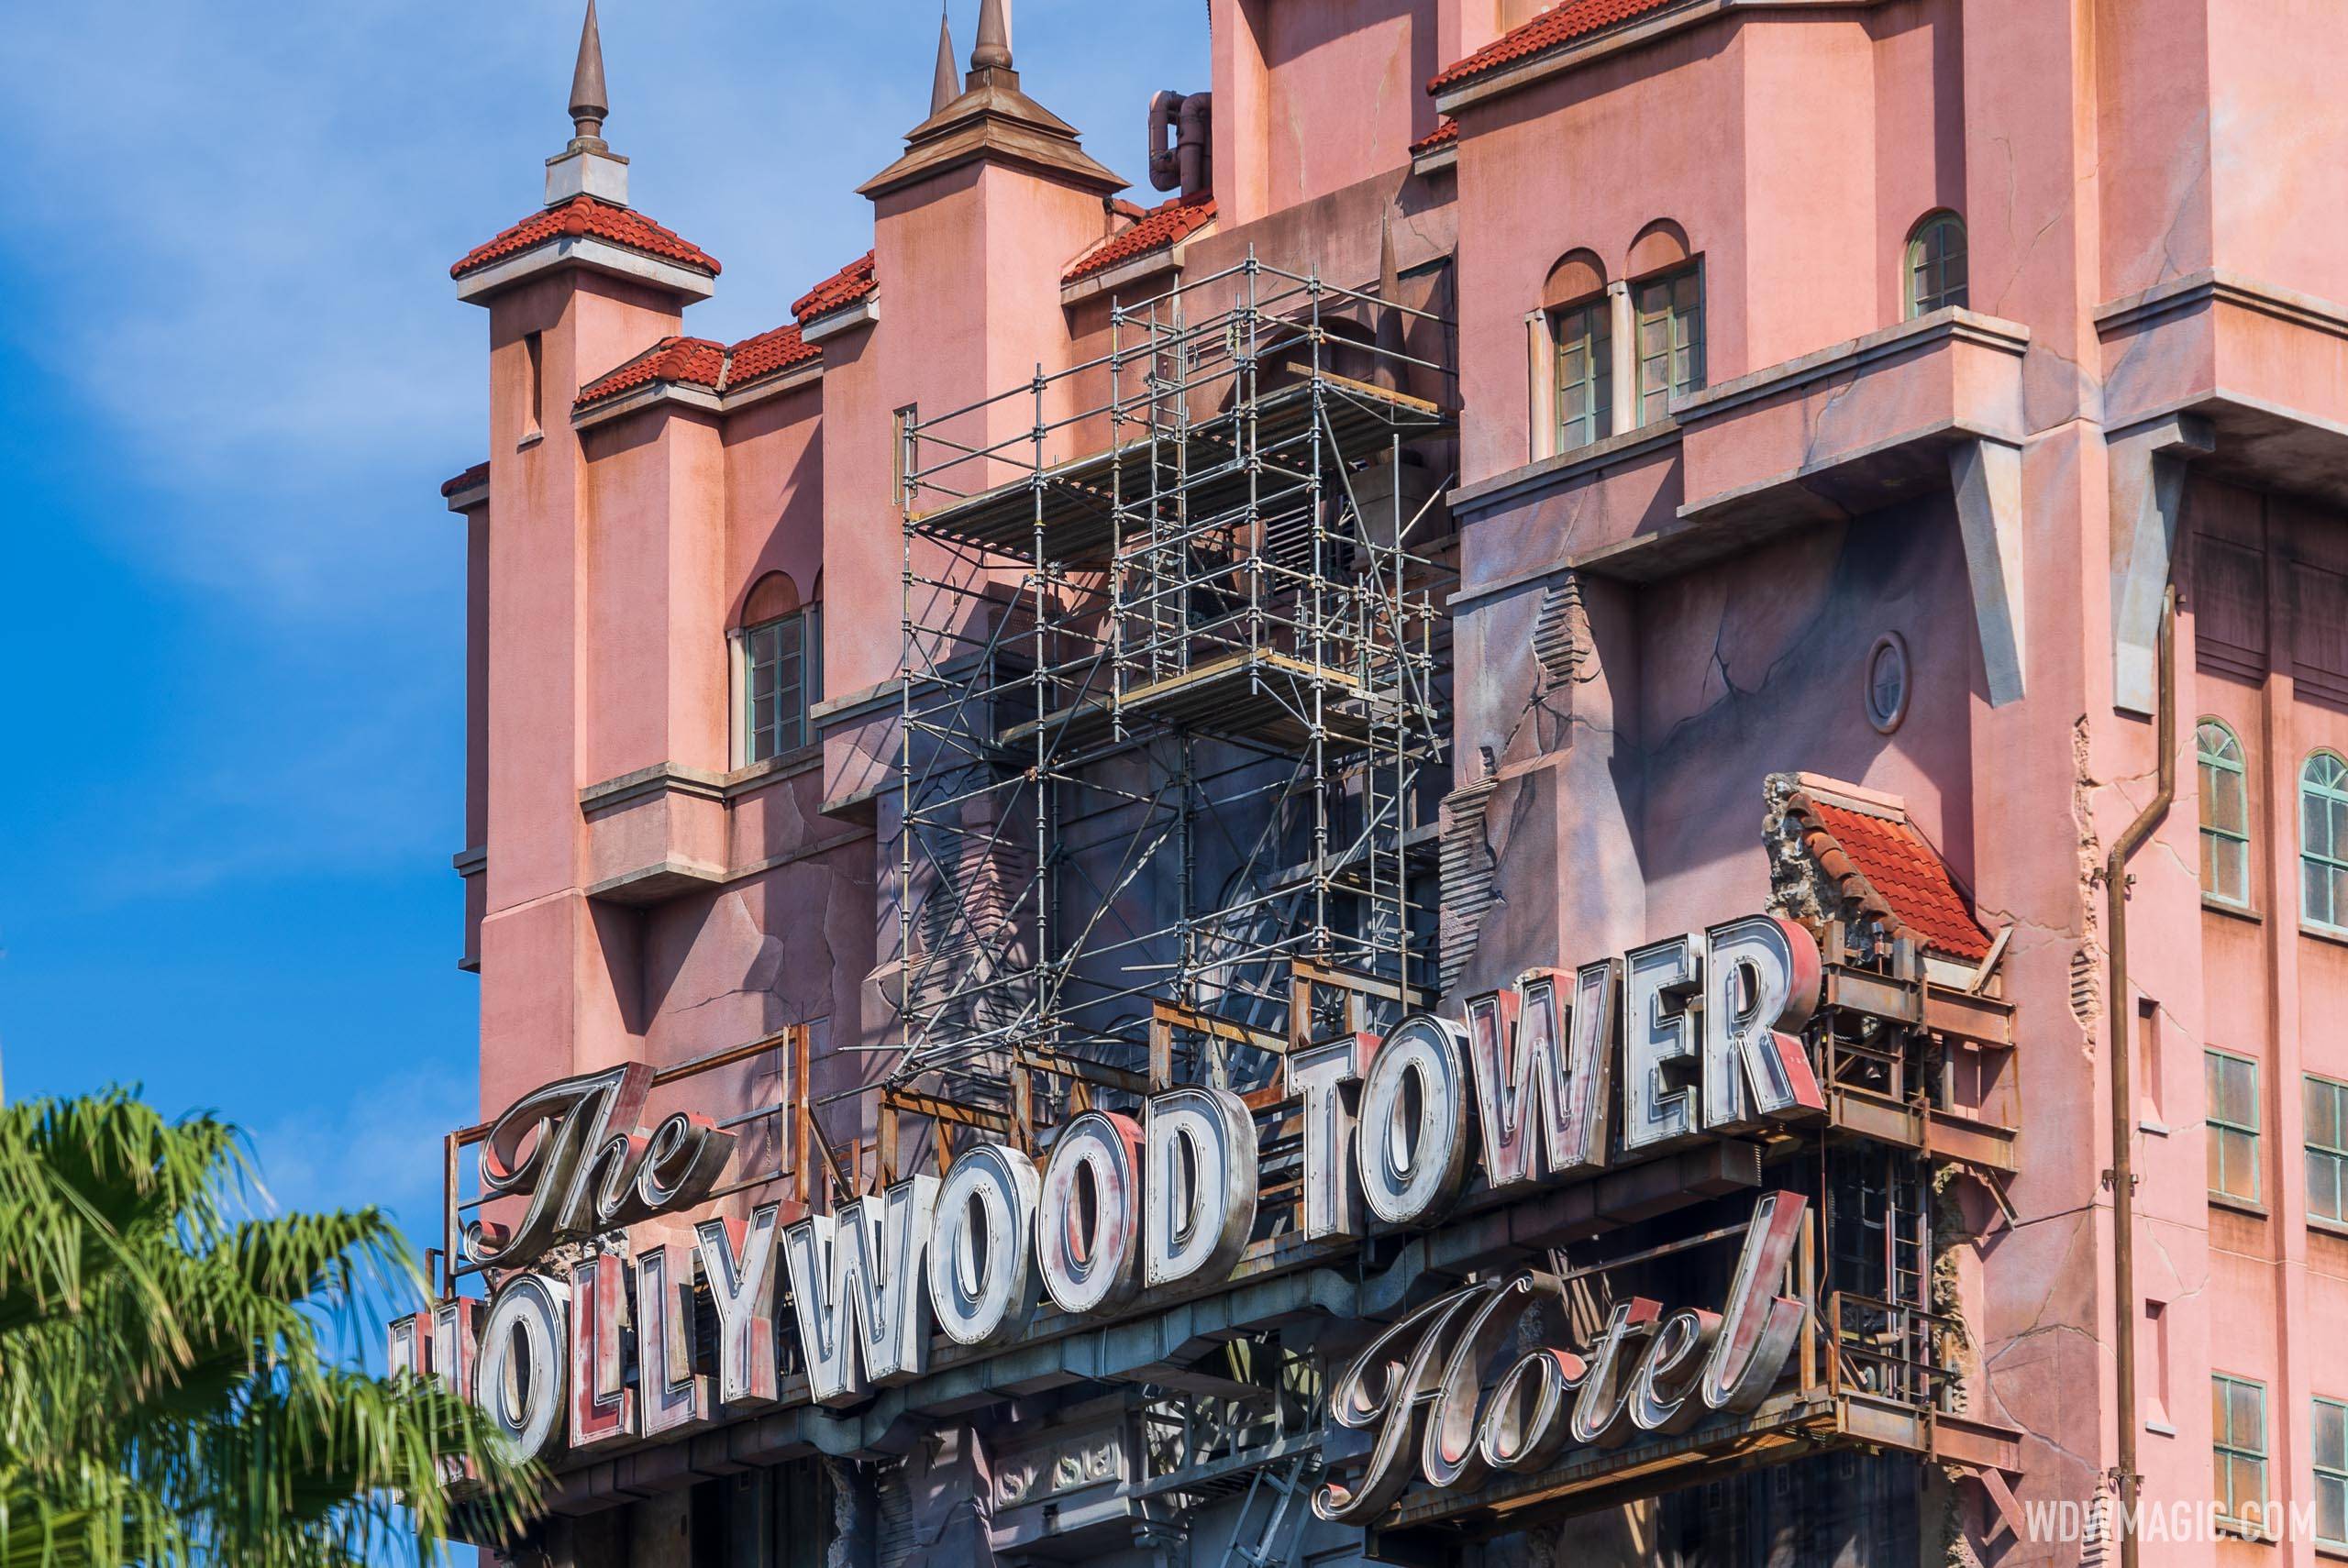 Exterior refurbishment underway at The Twilight Zone Tower of Terror in Disney's Hollywood Studios